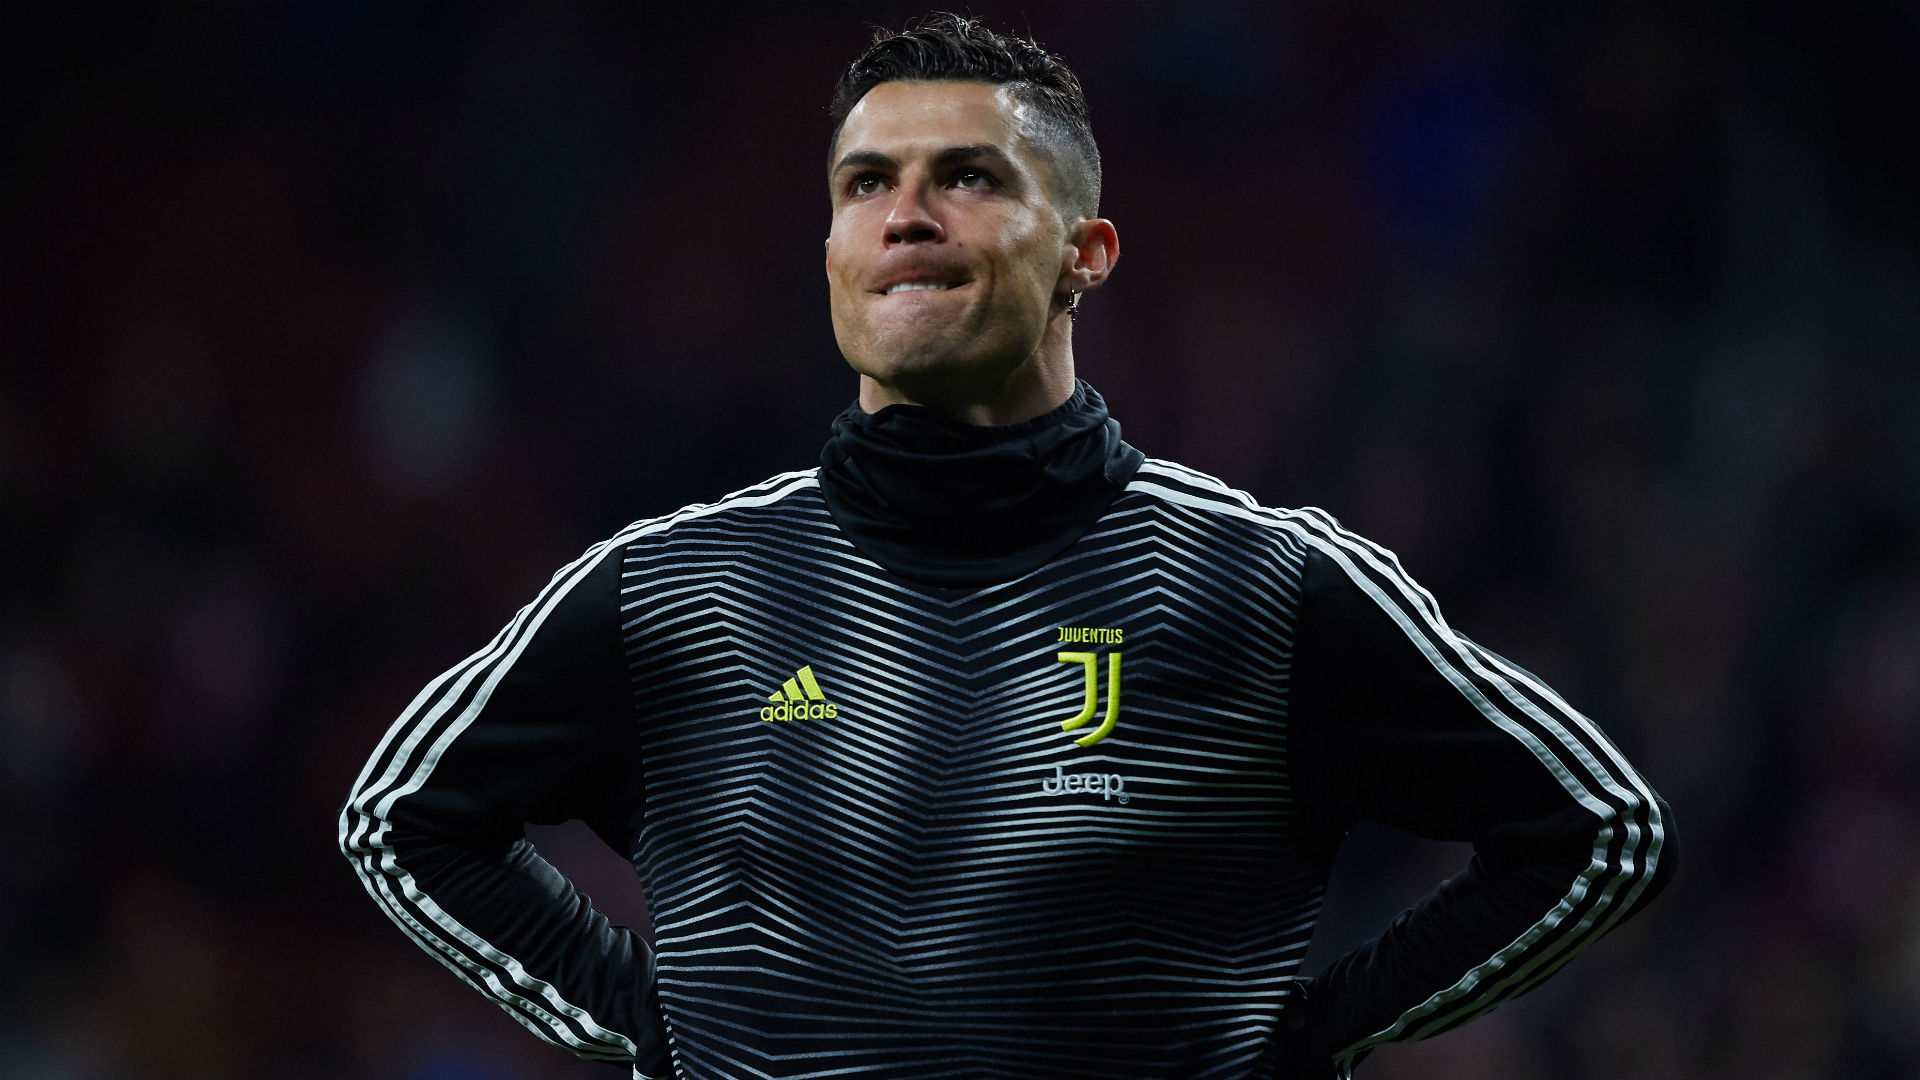 Ronaldo a great advantage for Juventus - Allegri | Sporting News